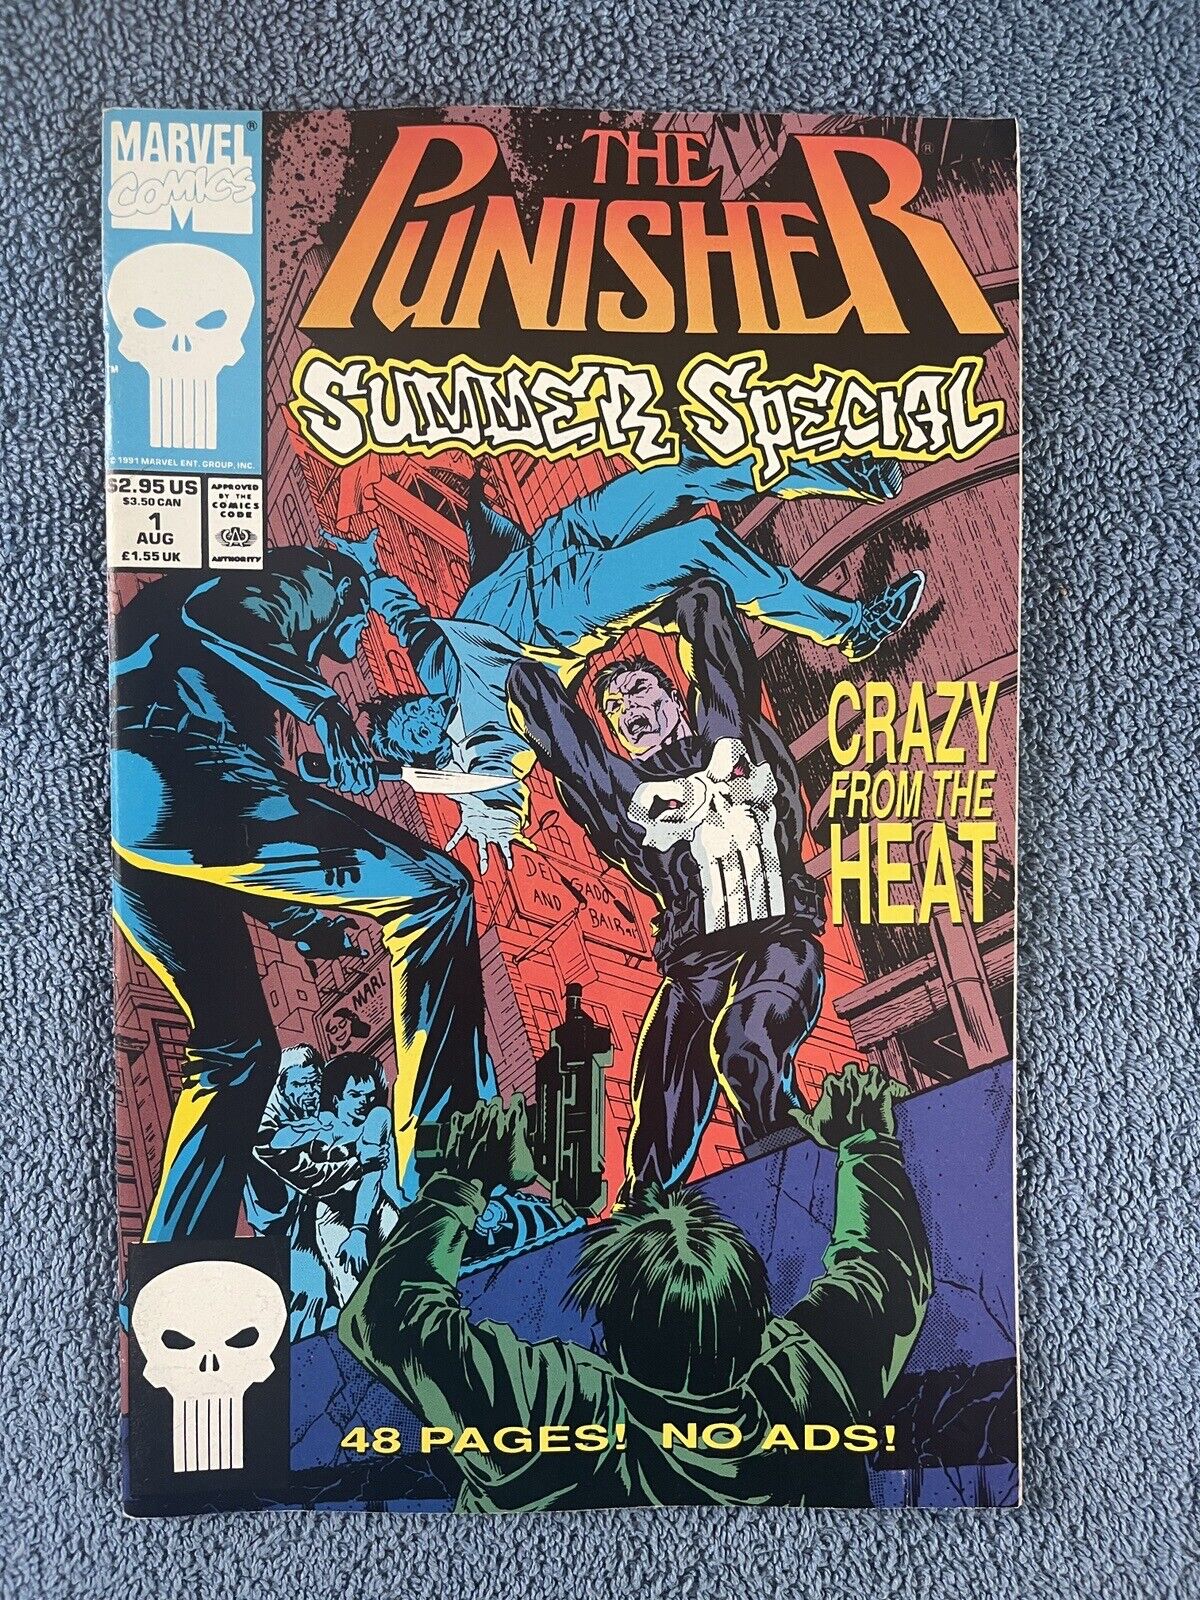 THE PUNISHER SUMMER SPECIAL #1 (Marvel, 1991) Mills & Mayerik